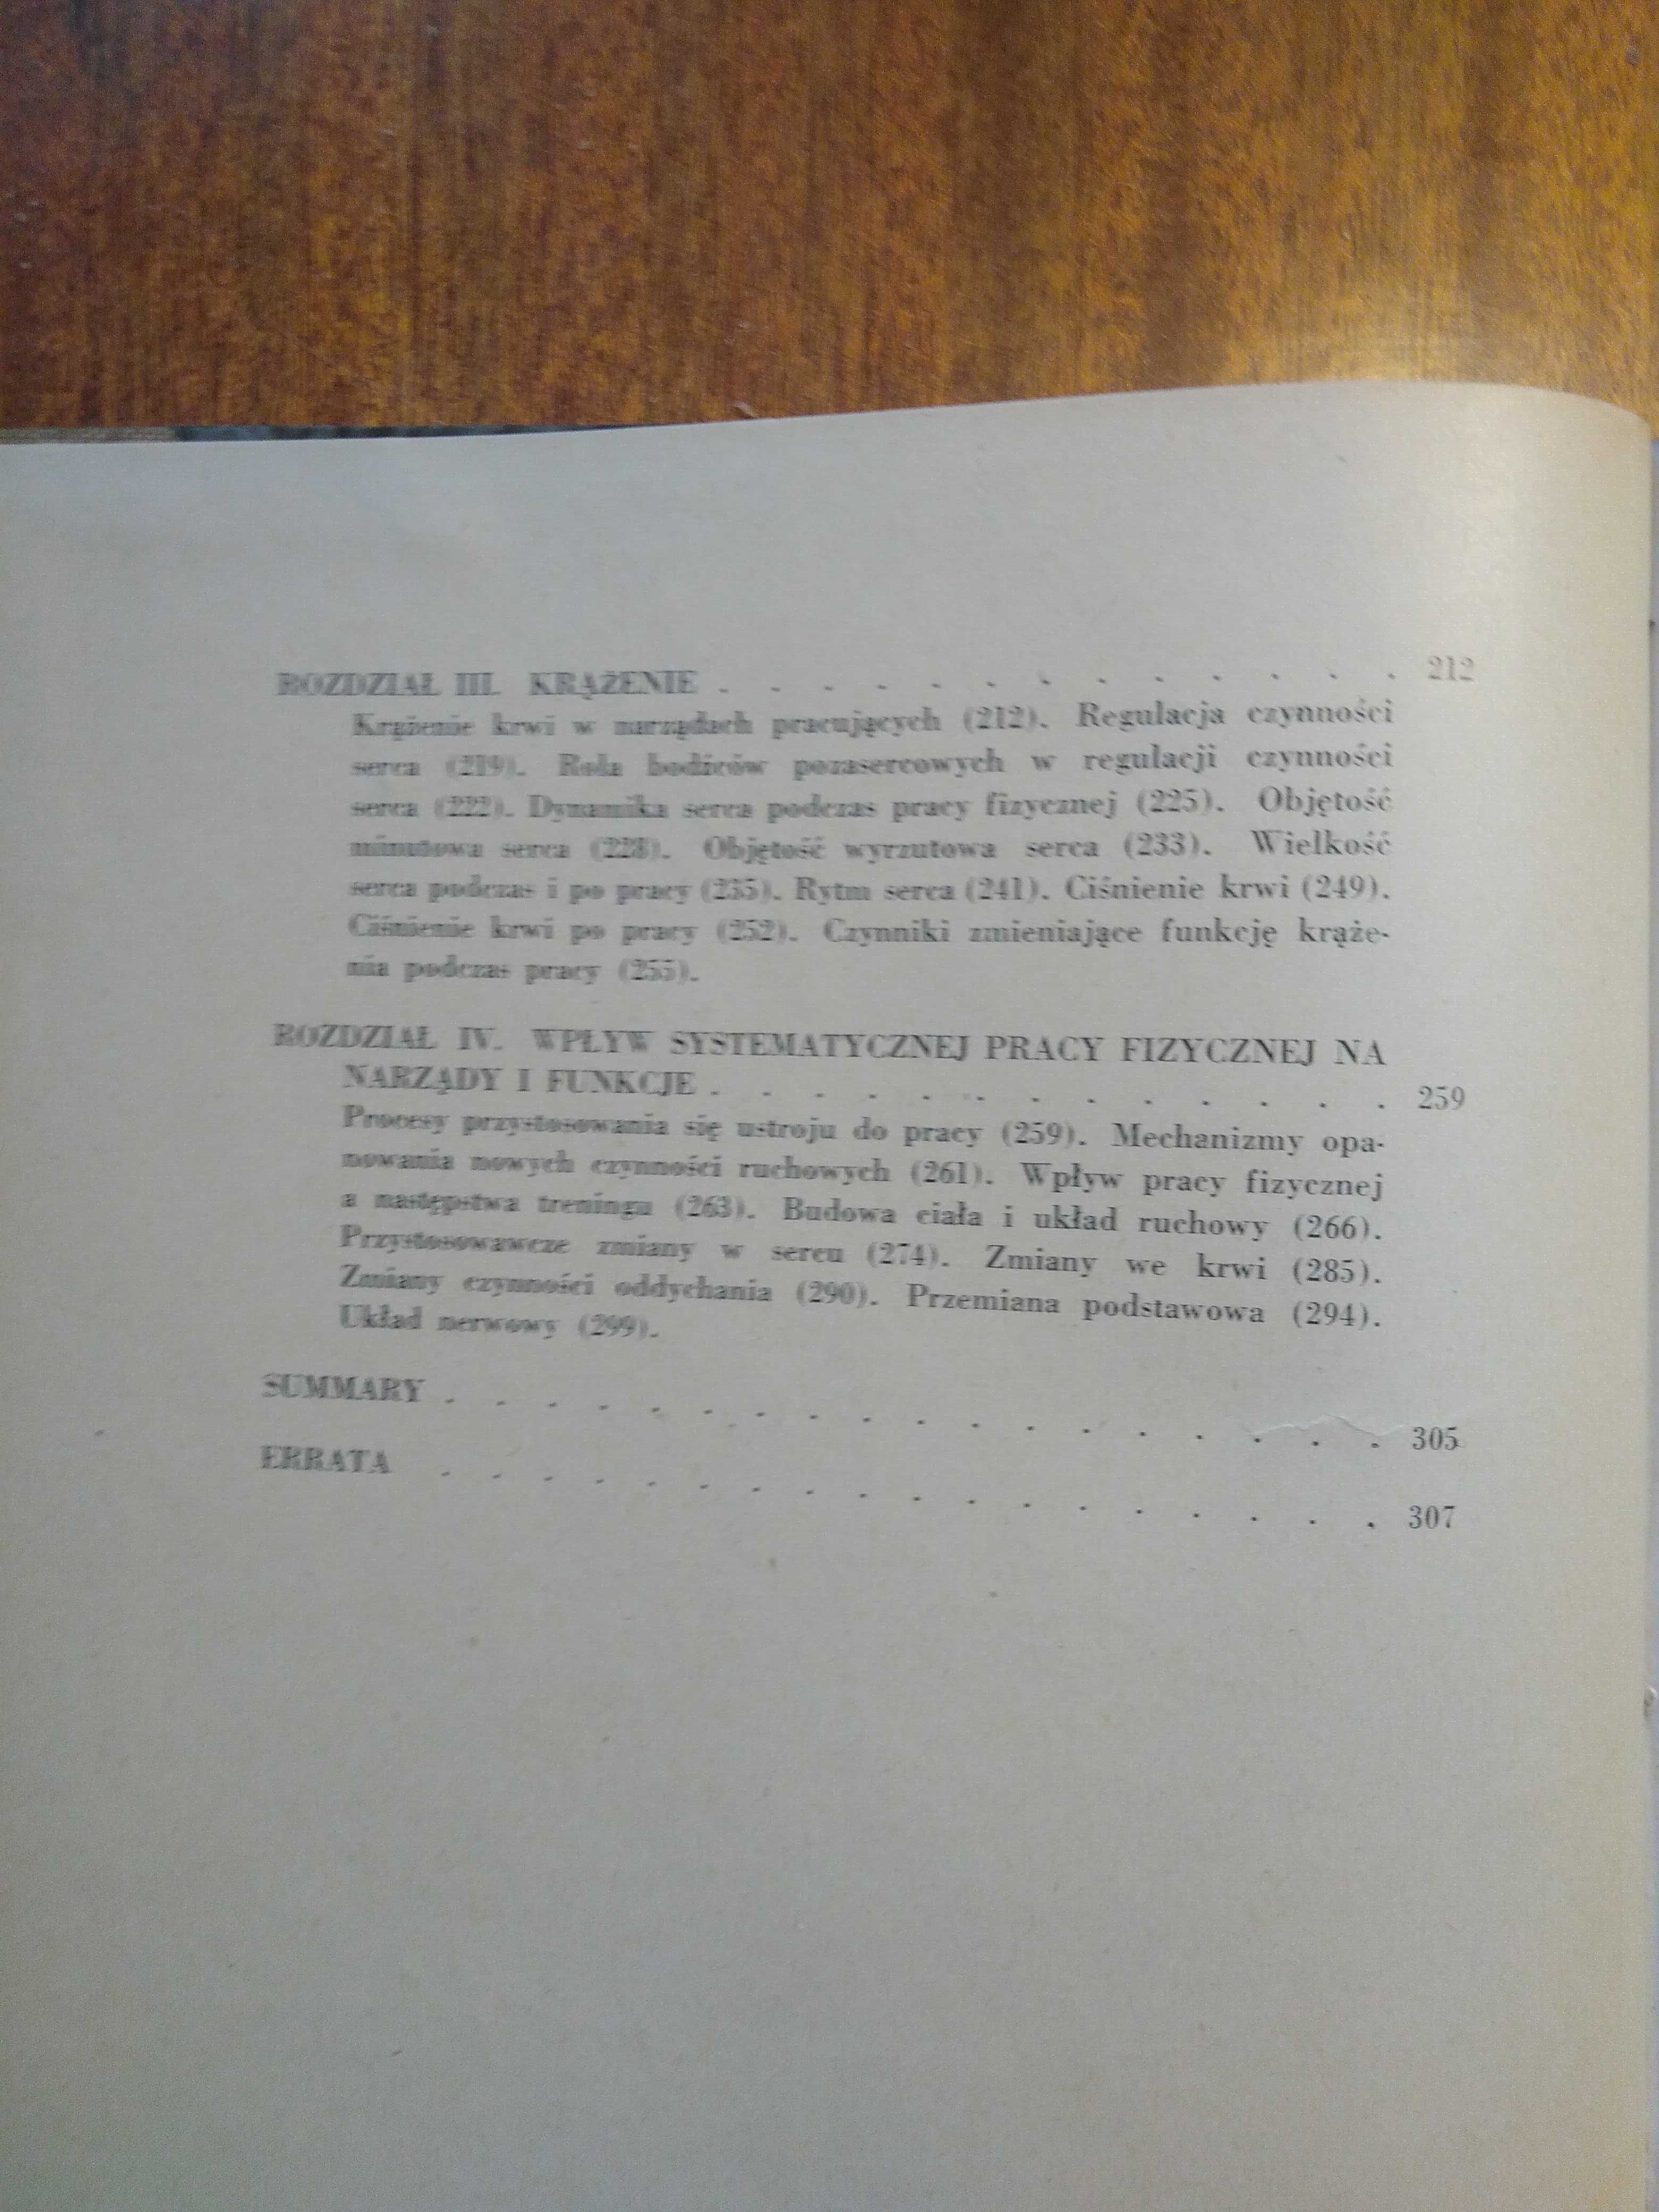 Fizjologia pracy - Missiuro 1938